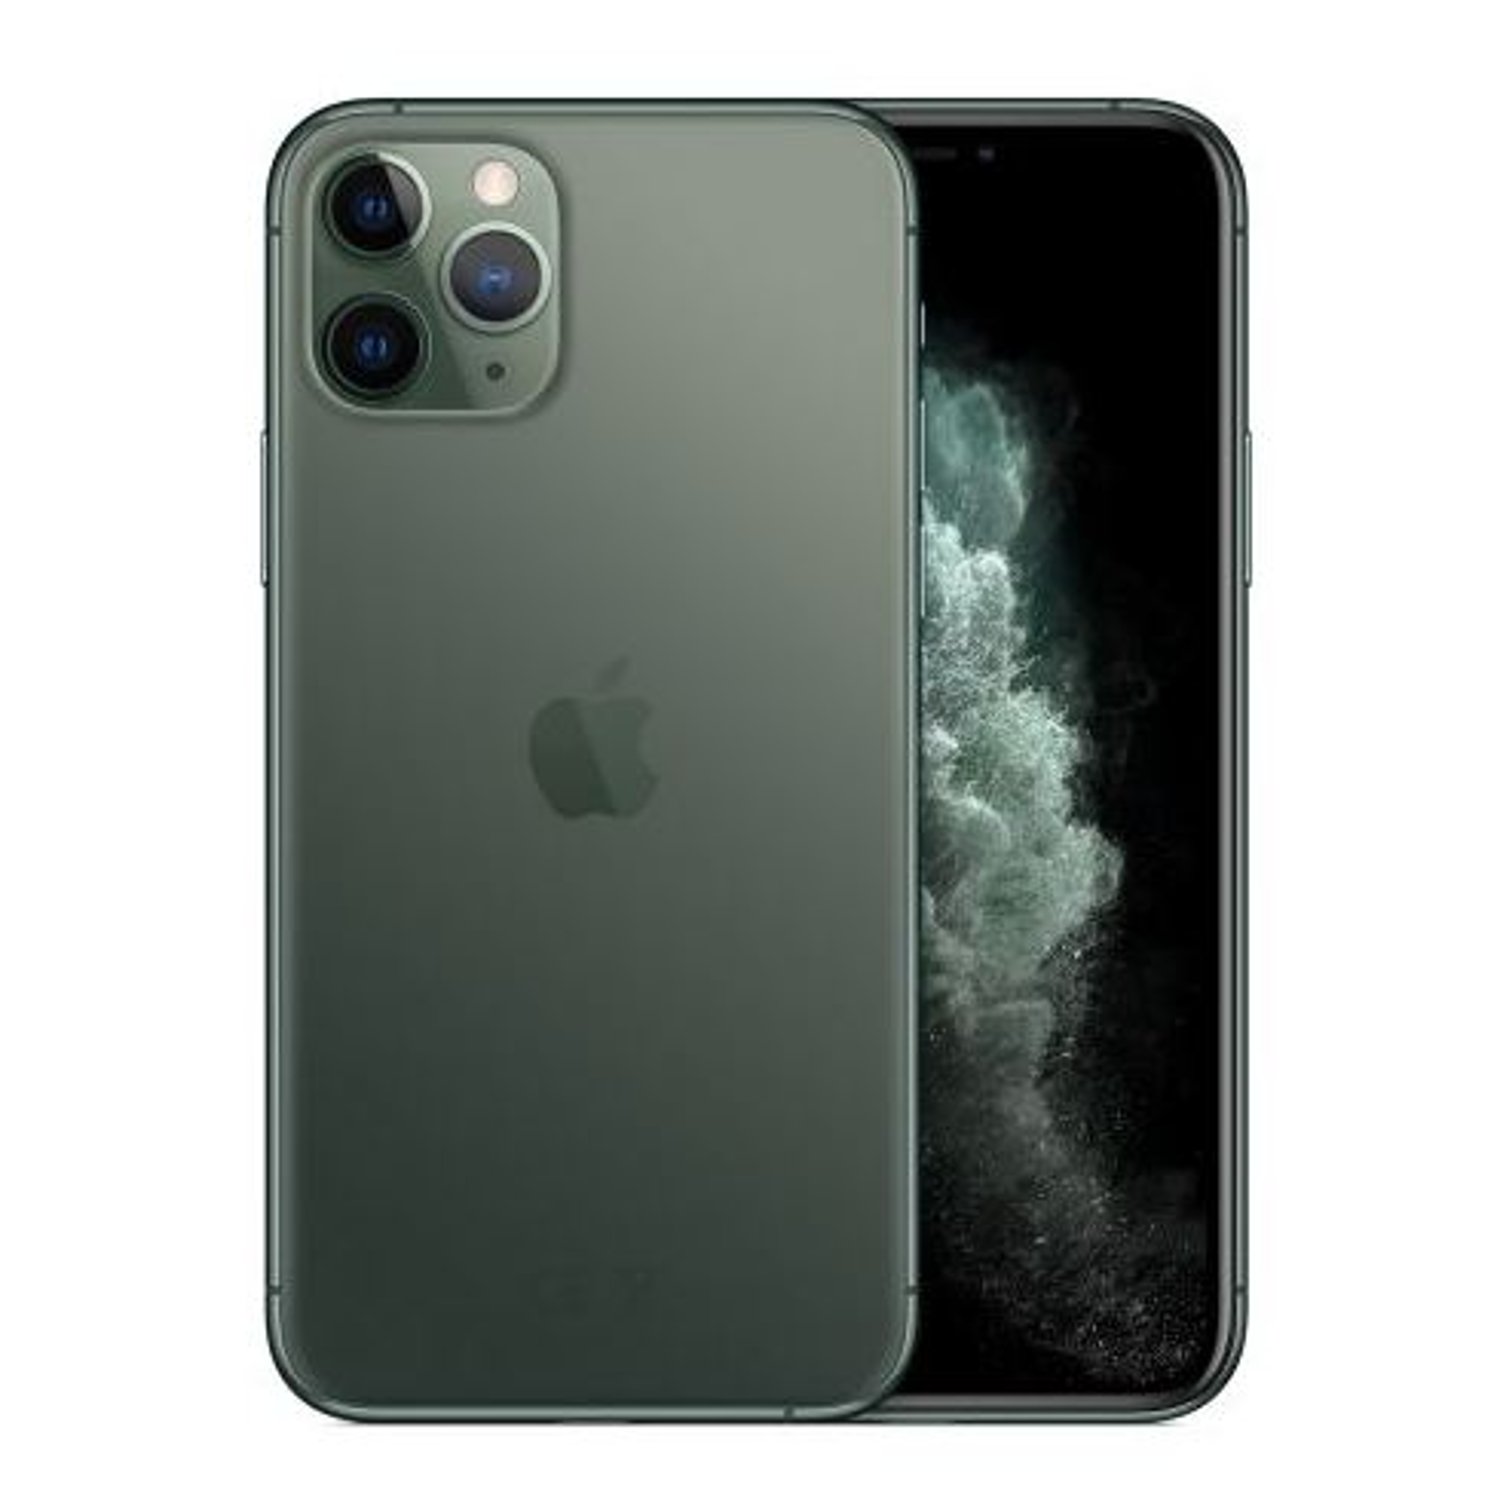 Apple iPhone 11 Pro (256GB) – Midnight Green